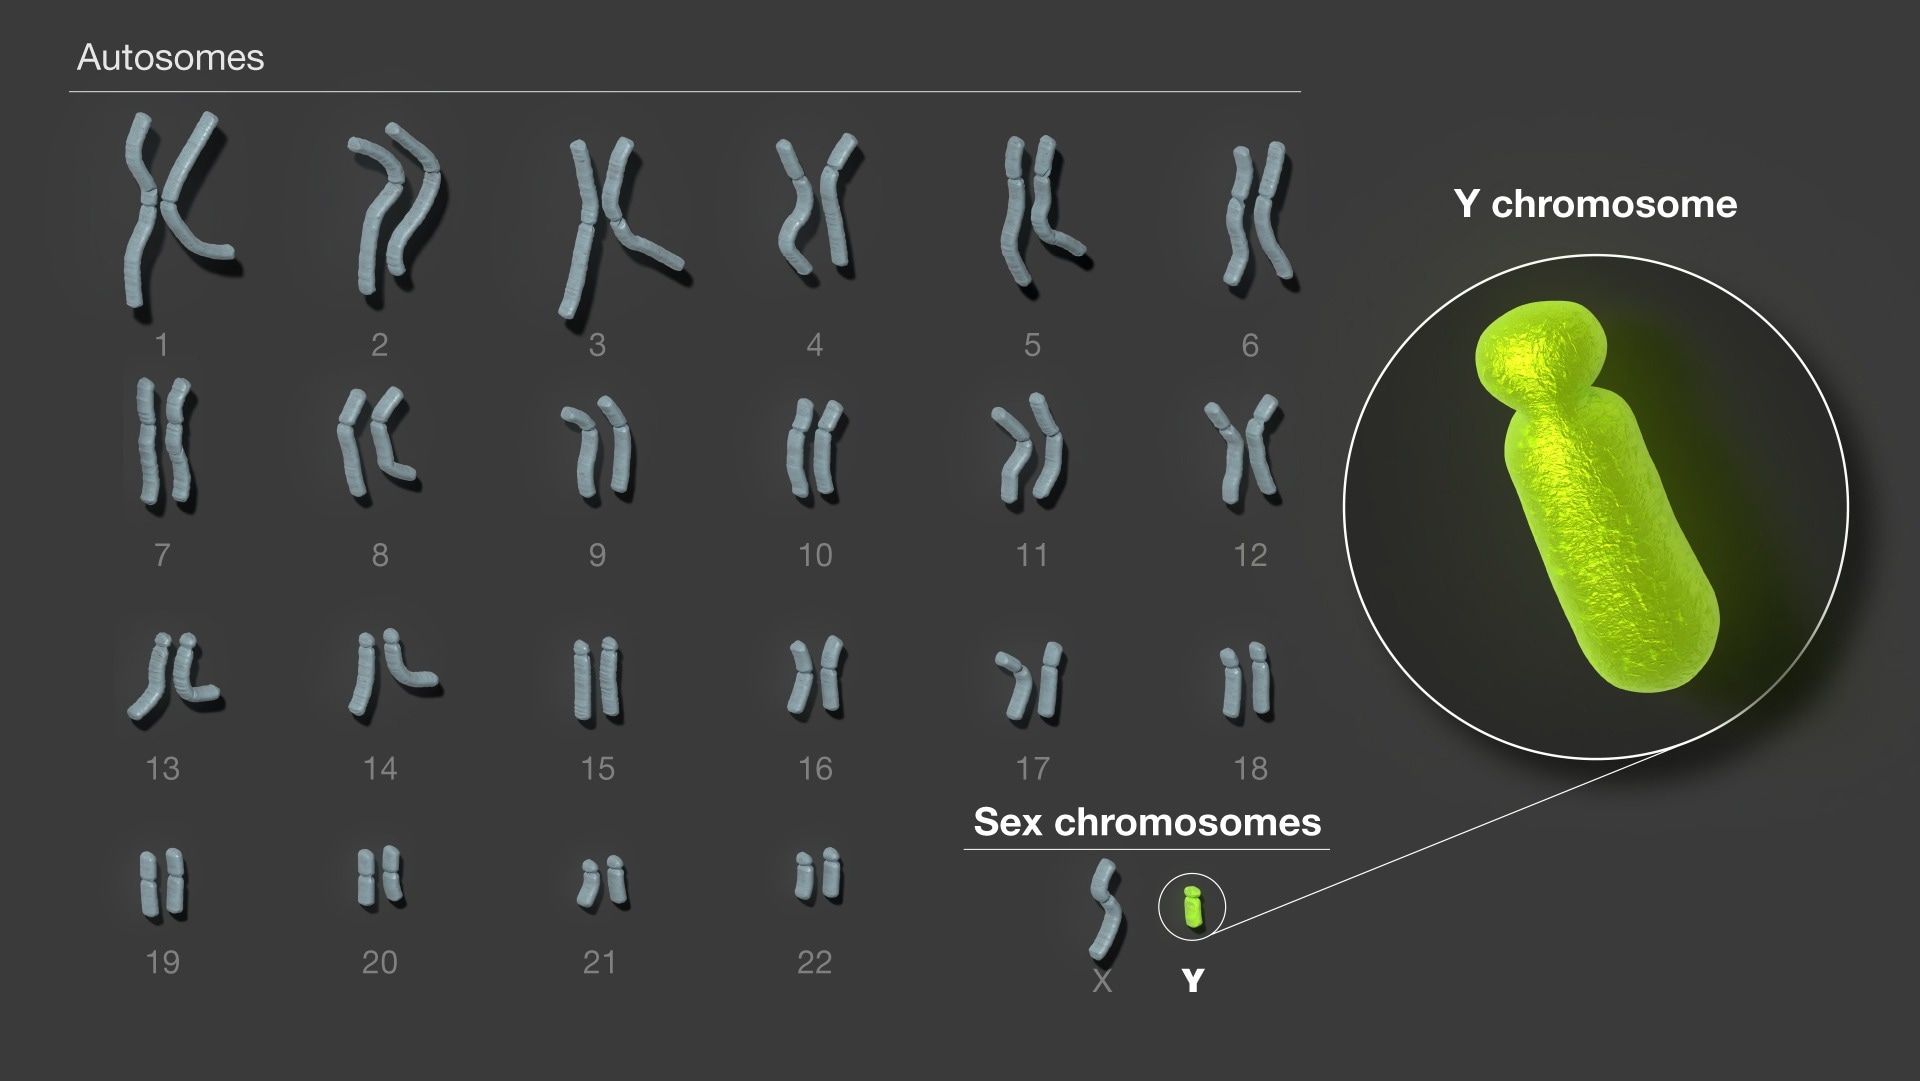 Human chromosomes. Image Credit: NIH/NHGRI